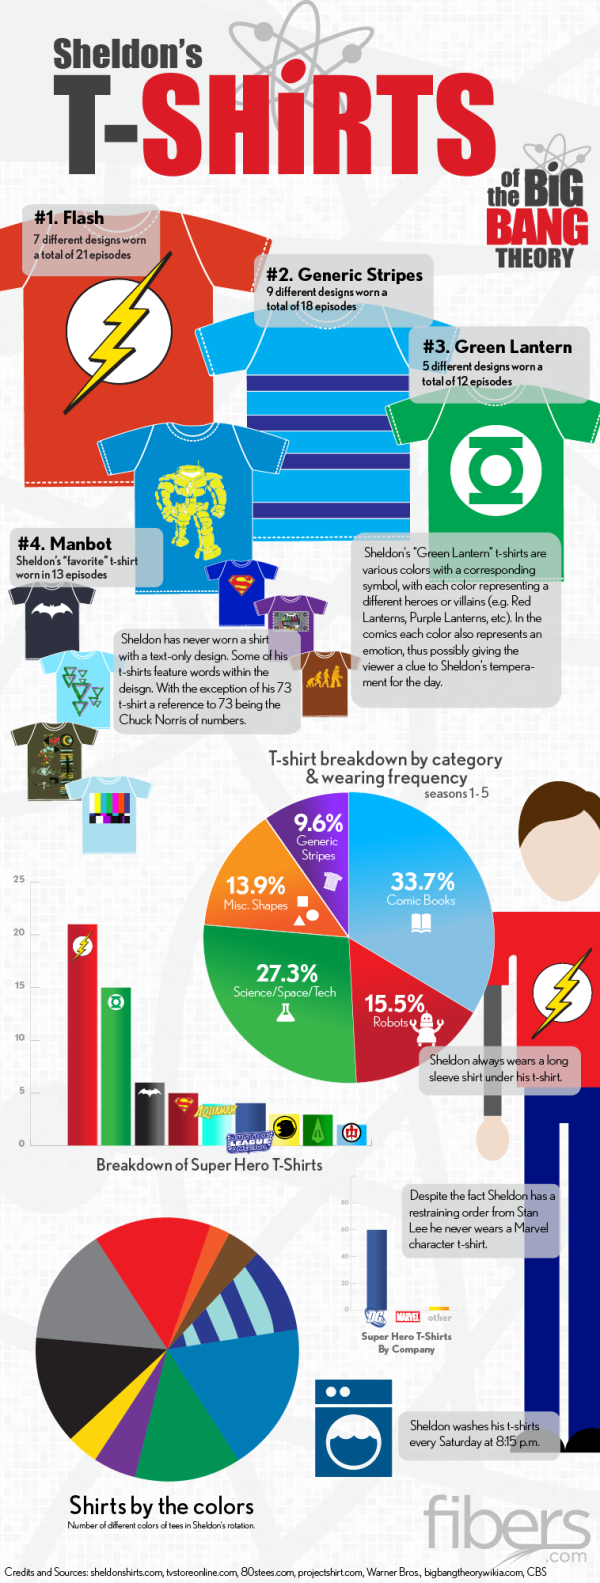 Sheldon's T-Shirts of The Big Bang Theory infographic